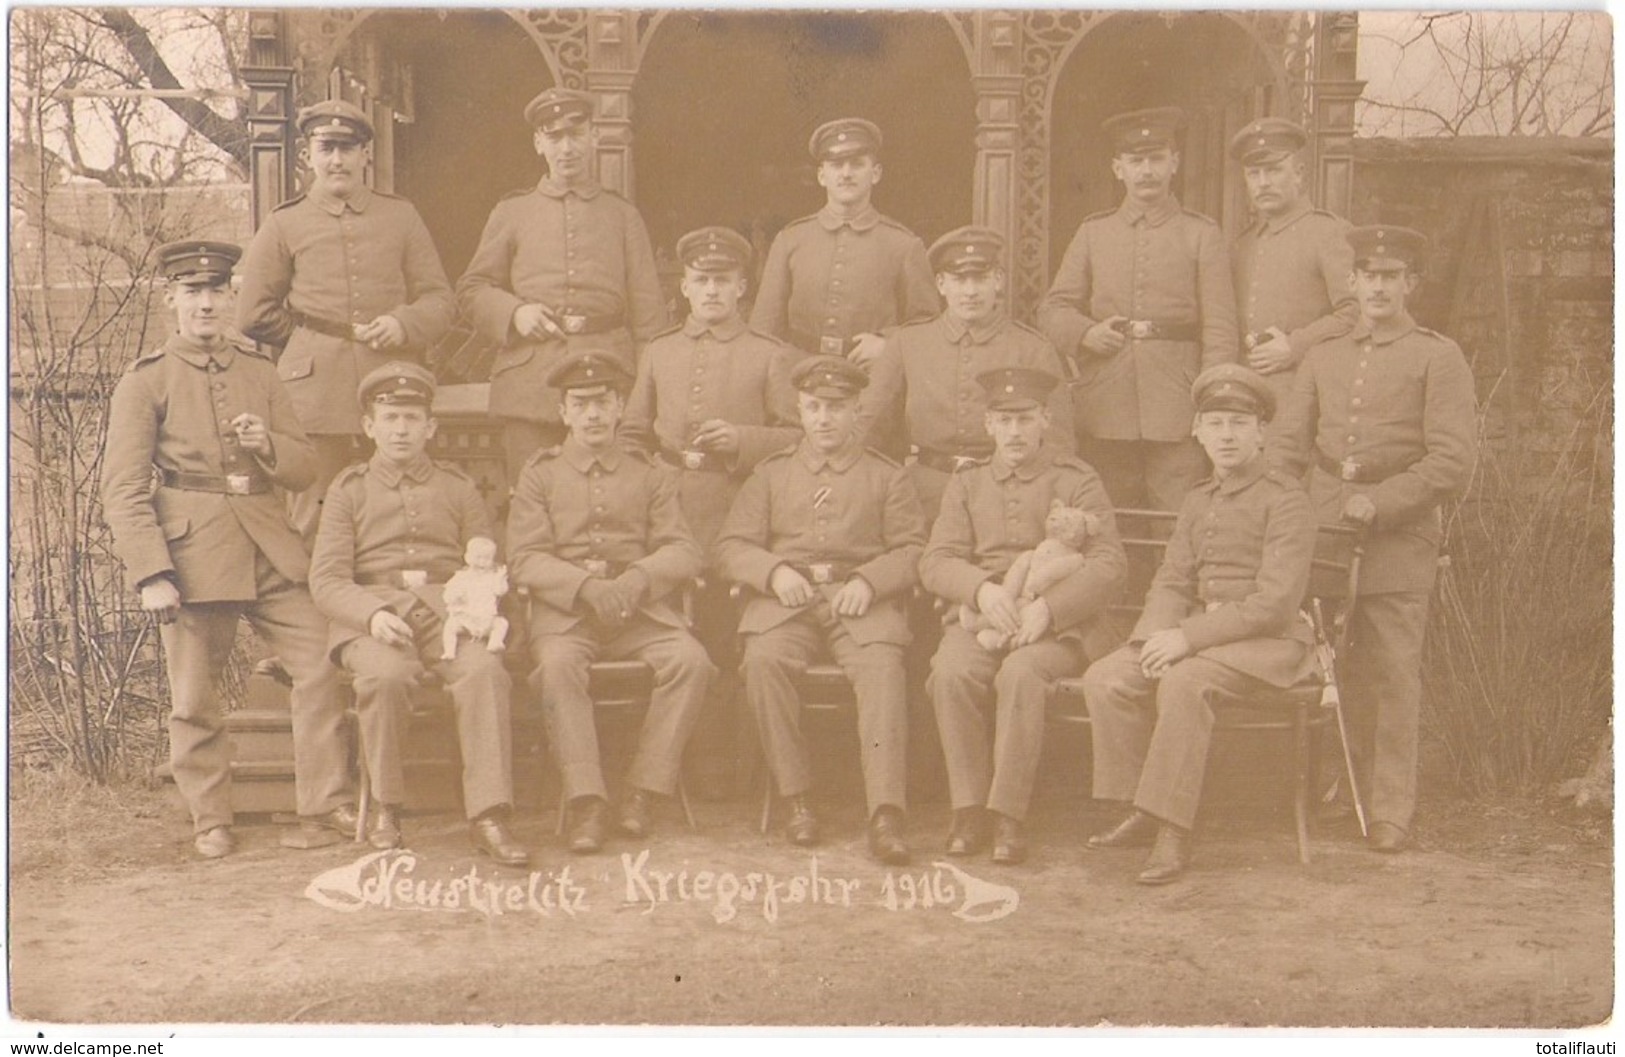 NEUSTRELITZ Mecklenburg Kriegsjahr 1916 Gruppenporträt Offiziere Soldaten Original Braune Fotokarte Hofphotograph Groth - Neustrelitz